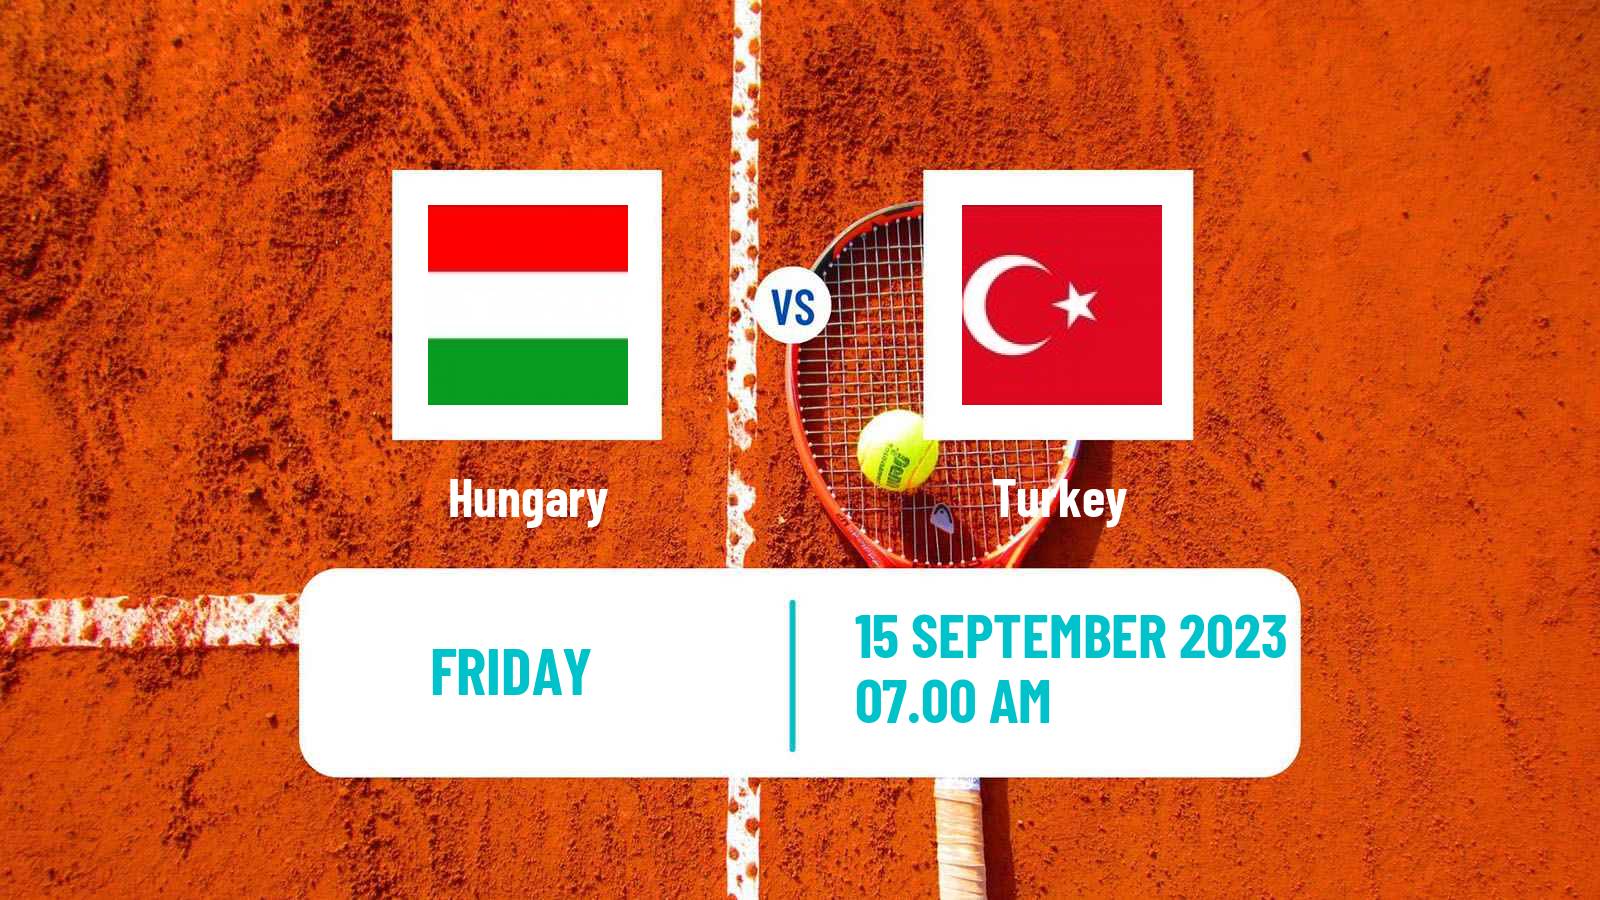 Tennis Davis Cup World Group I Teams Hungary - Turkey